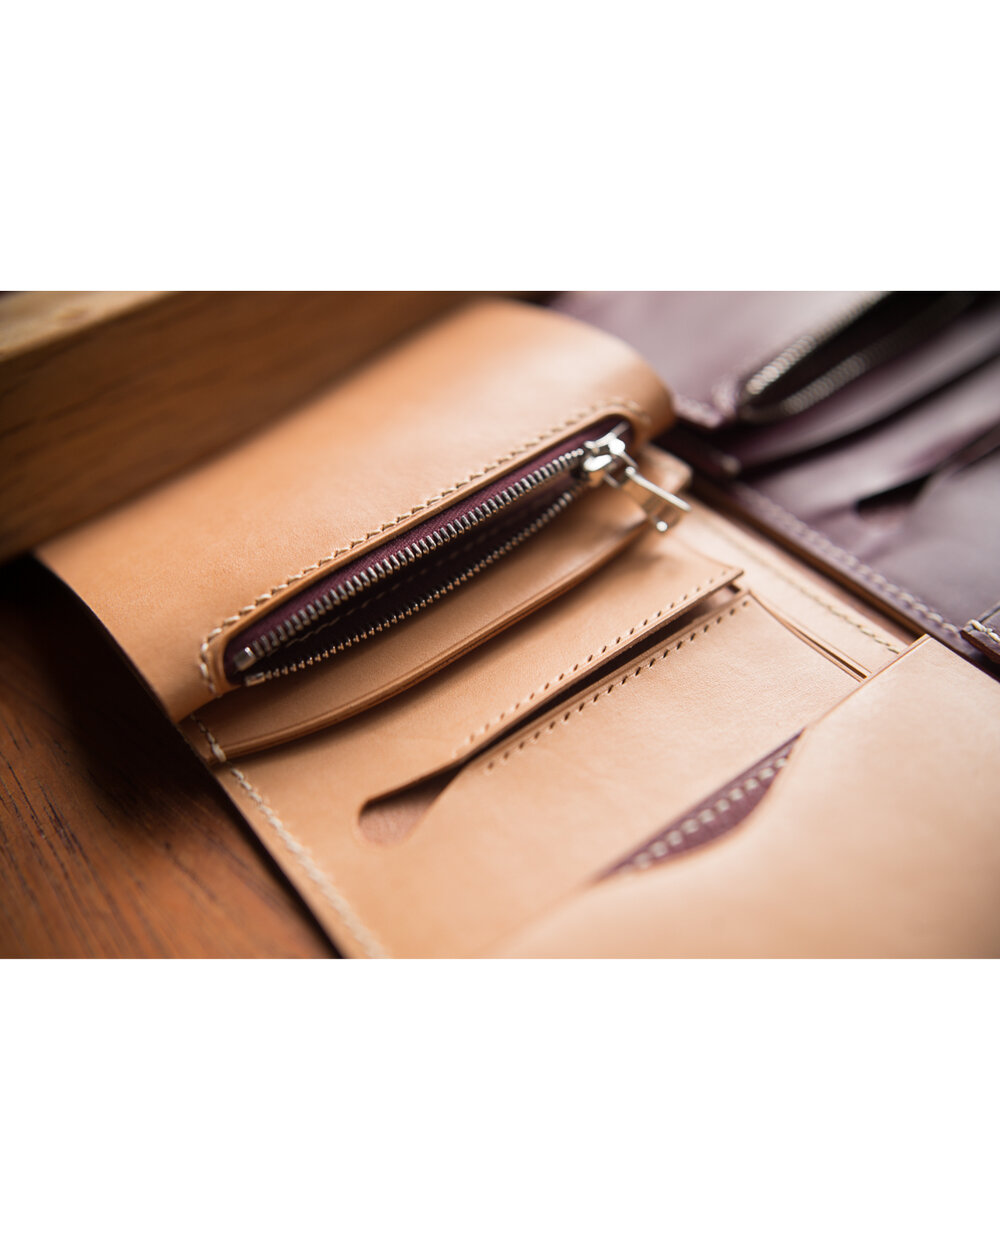 Walpier Conceria, Buttero, Italian Vachetta Leather, Panel, Light Brown #2  